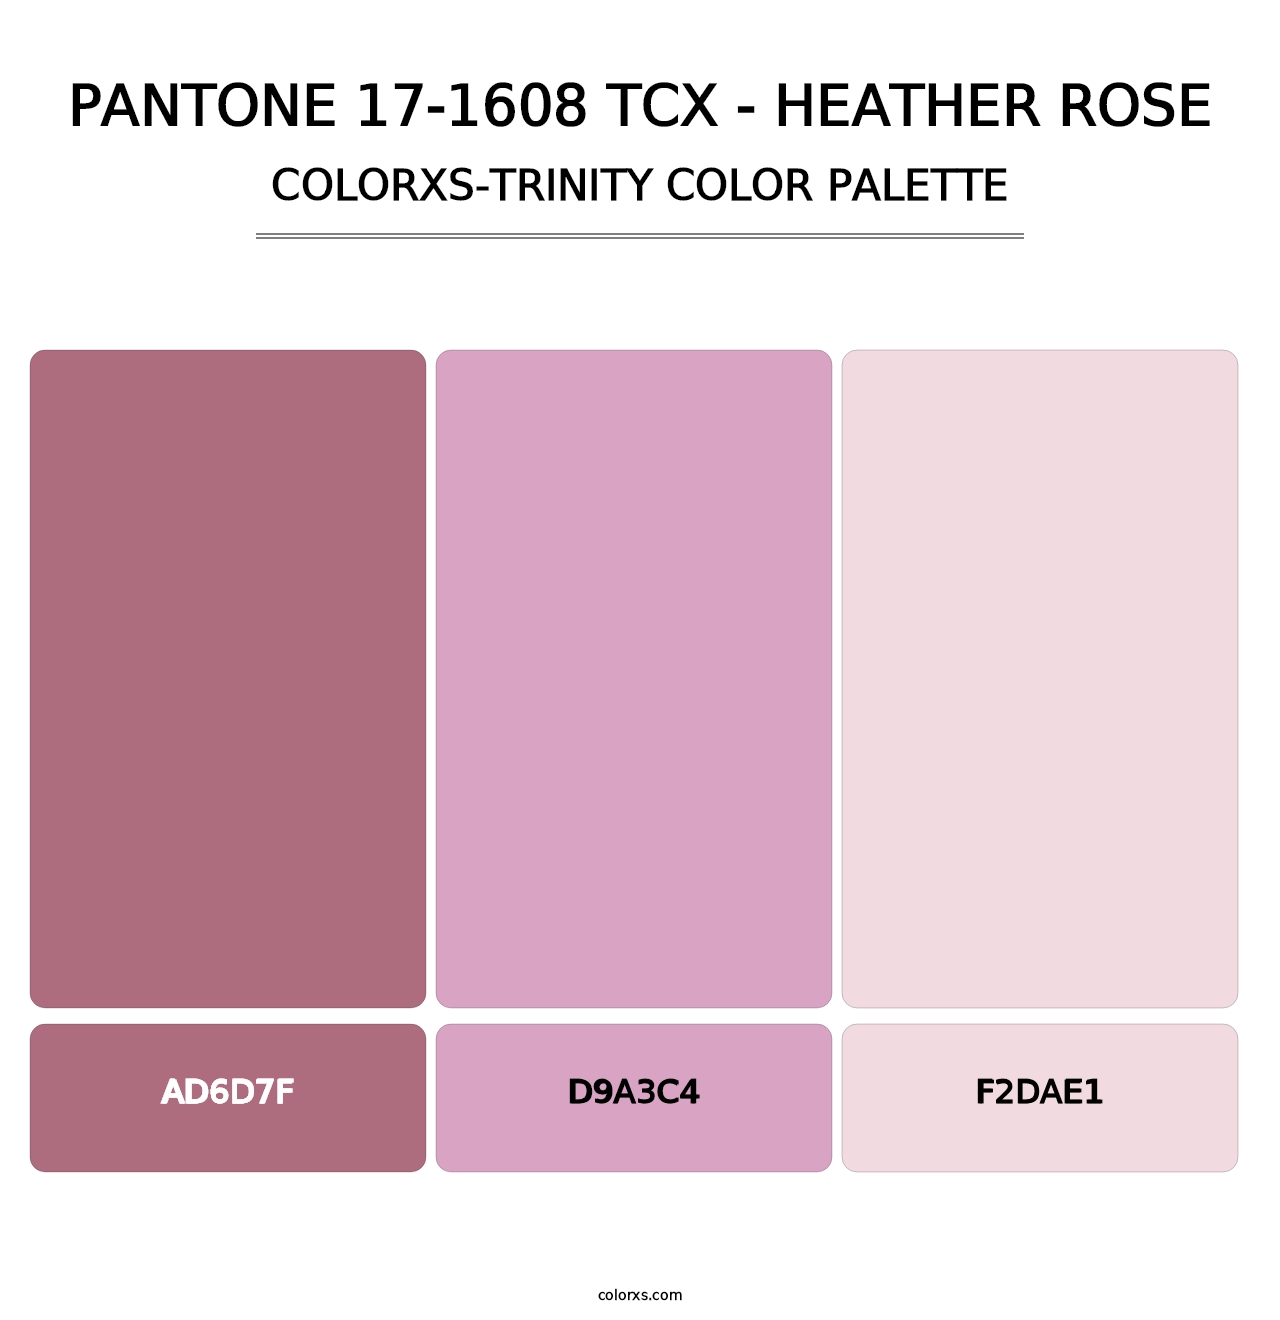 PANTONE 17-1608 TCX - Heather Rose - Colorxs Trinity Palette